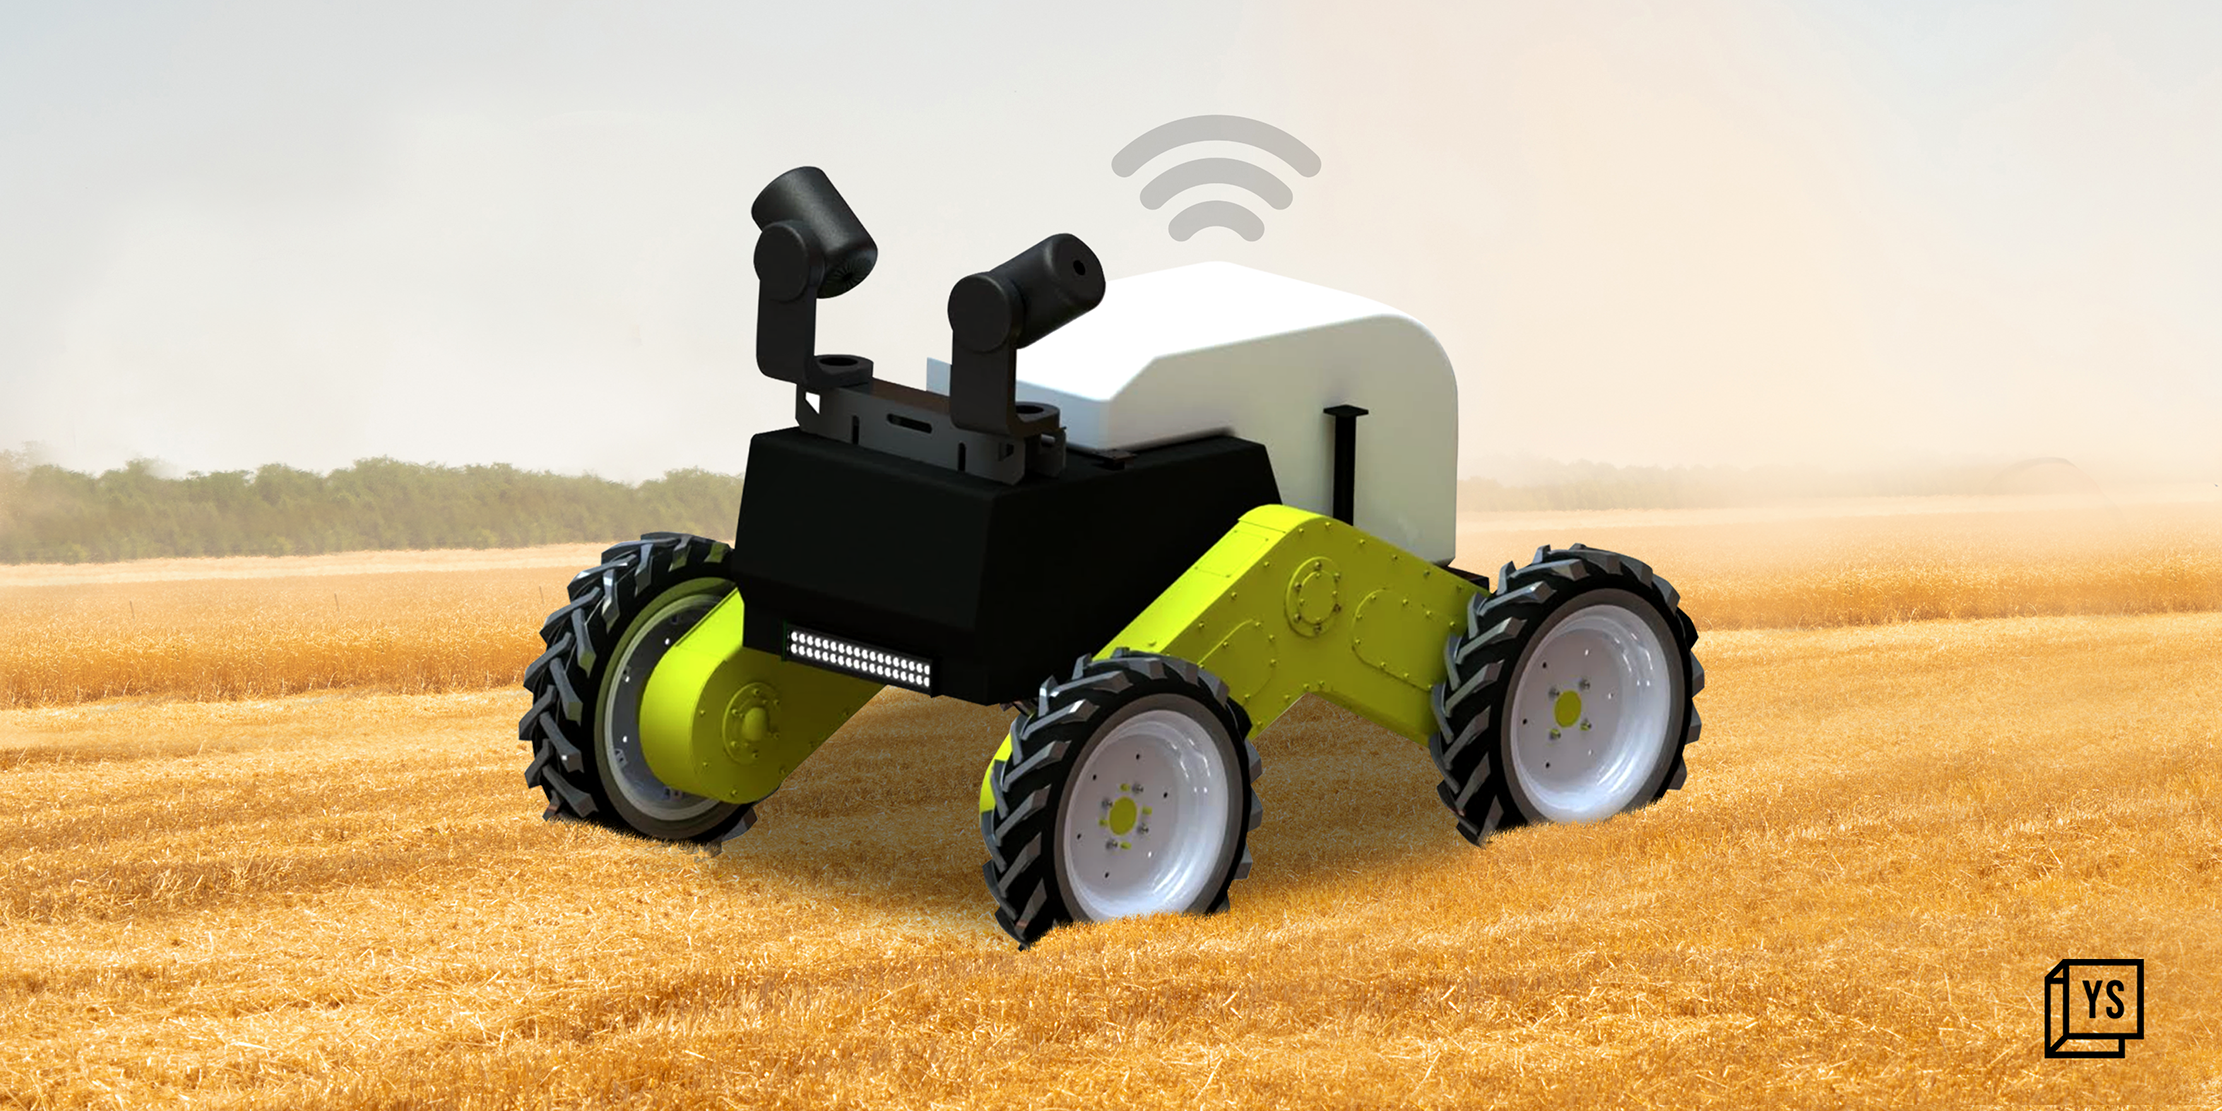 Bullwork Mobility's autonomous EVs aim to change the future of farming